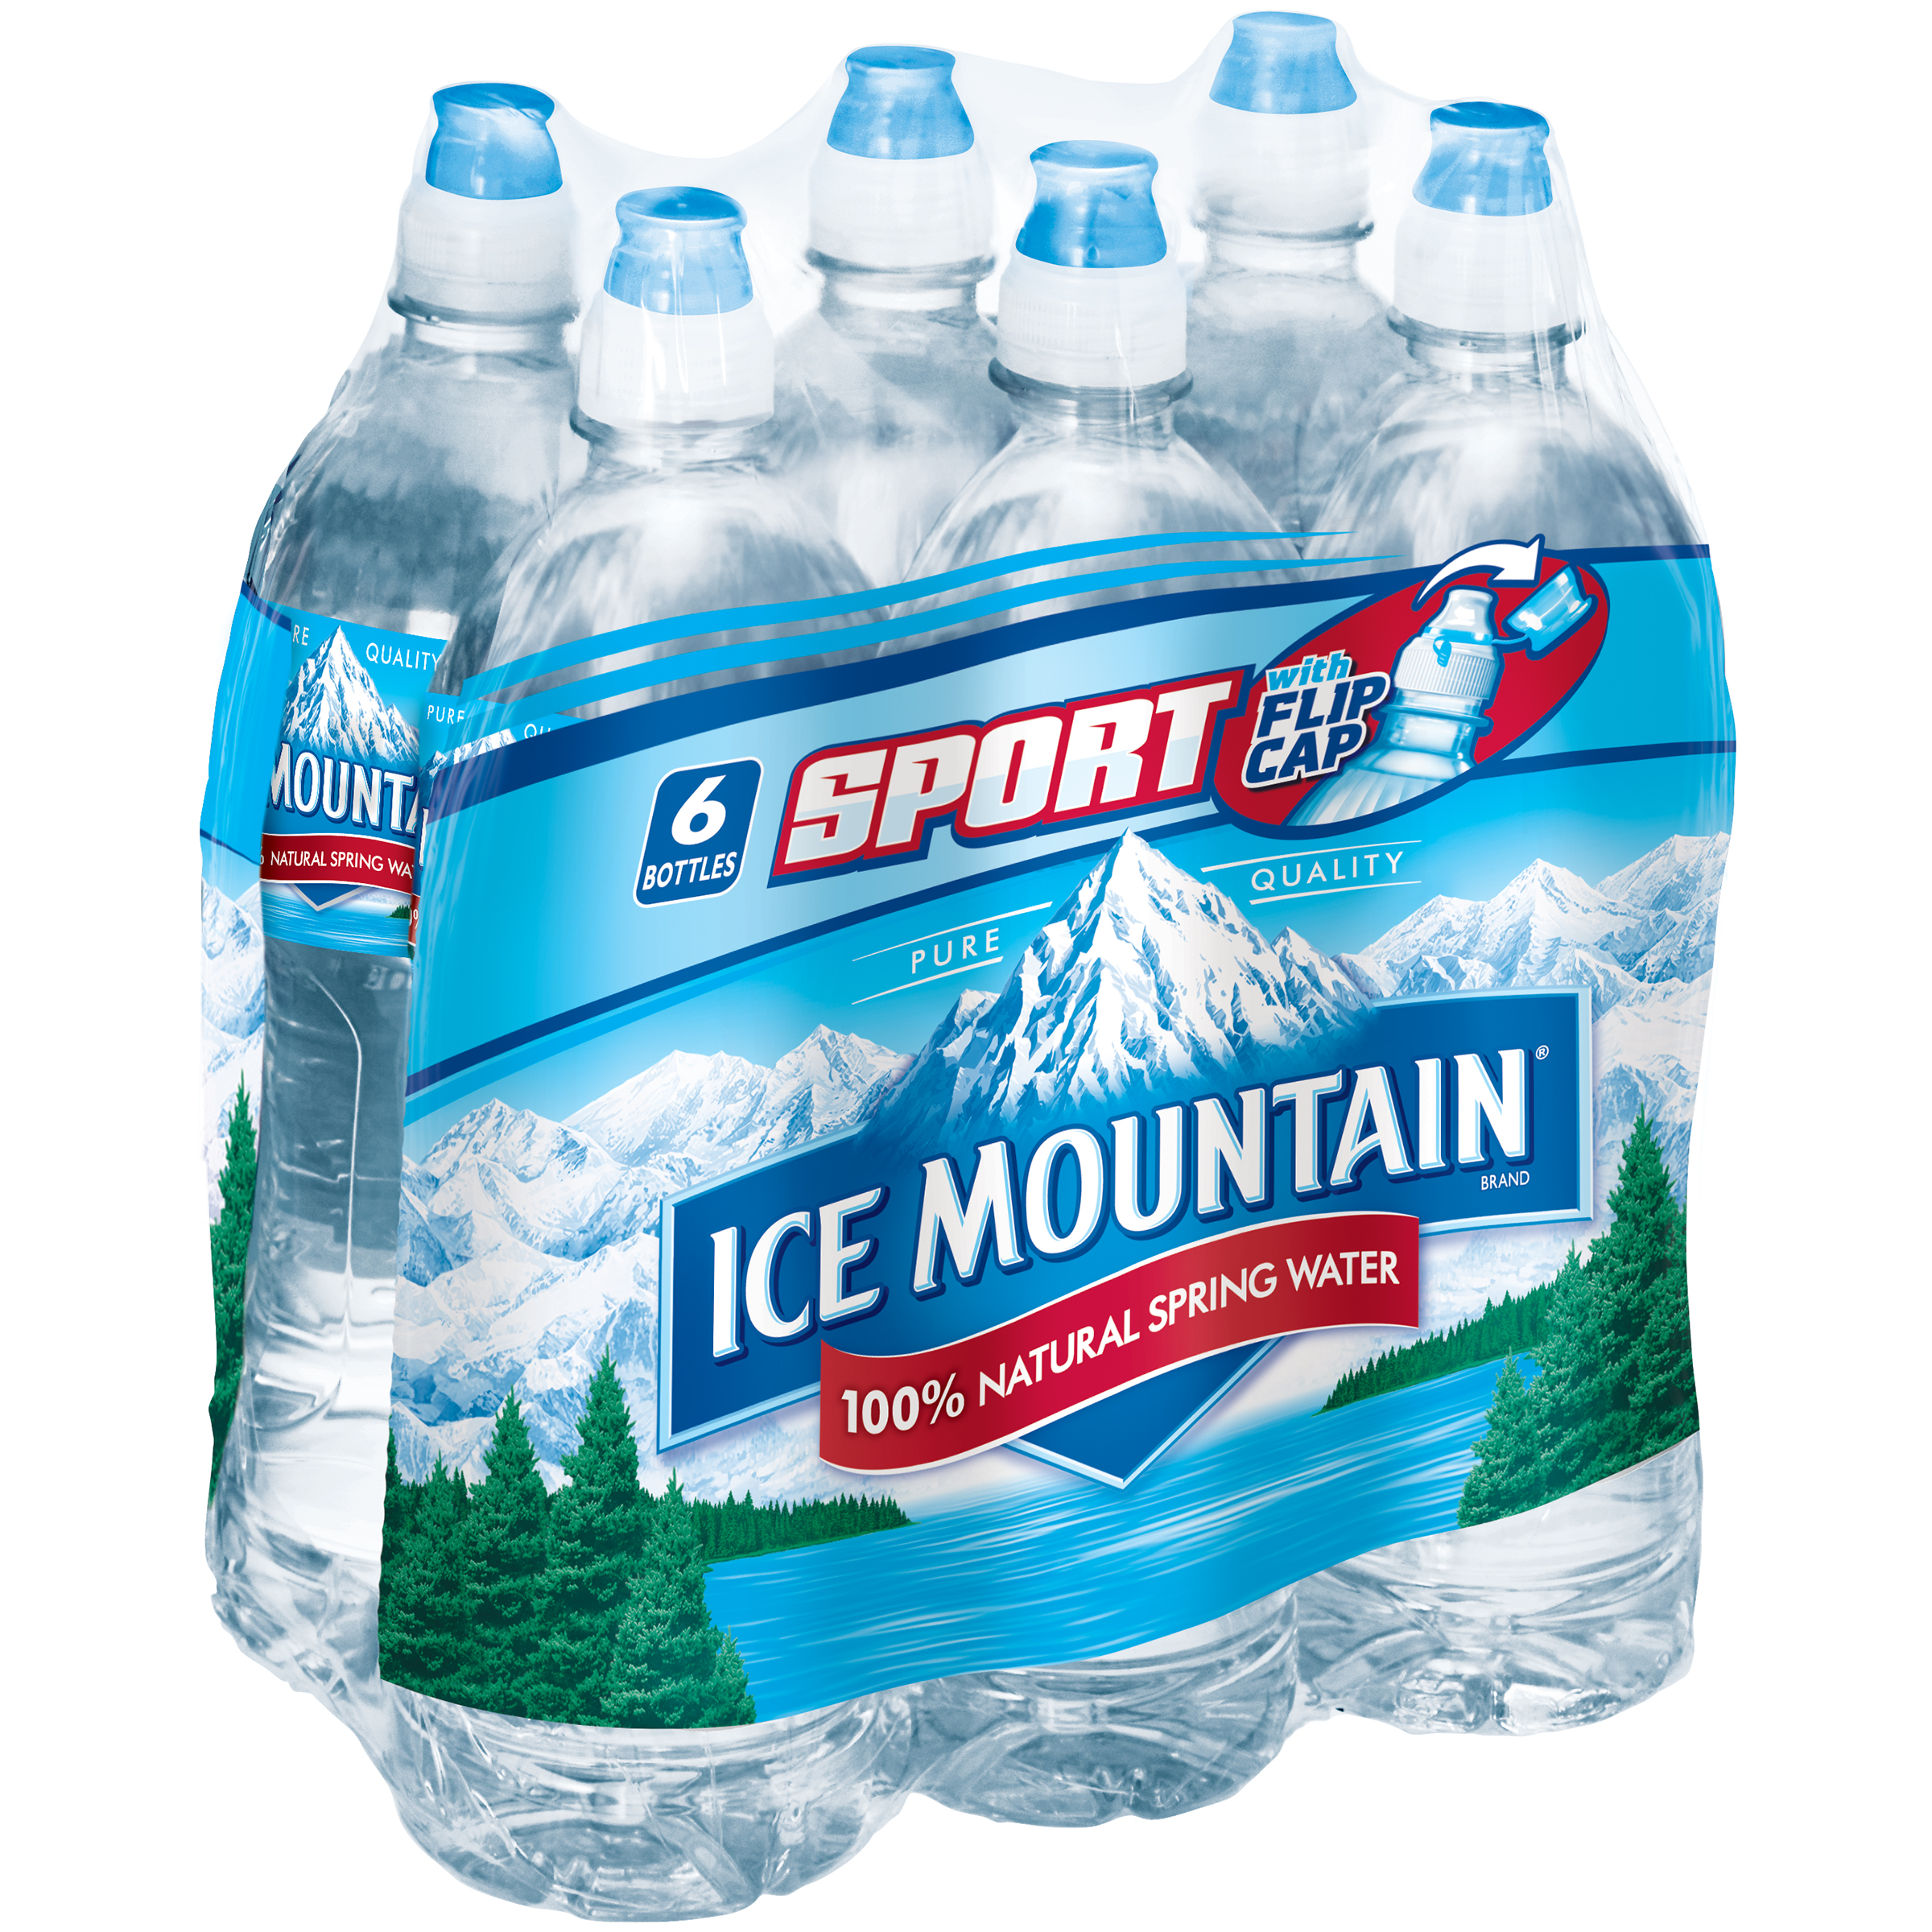 Качественная минеральная вода. Минеральная вода icemontain. Минеральные воды. Минеральные воды горы. Бутылка Spring Water.